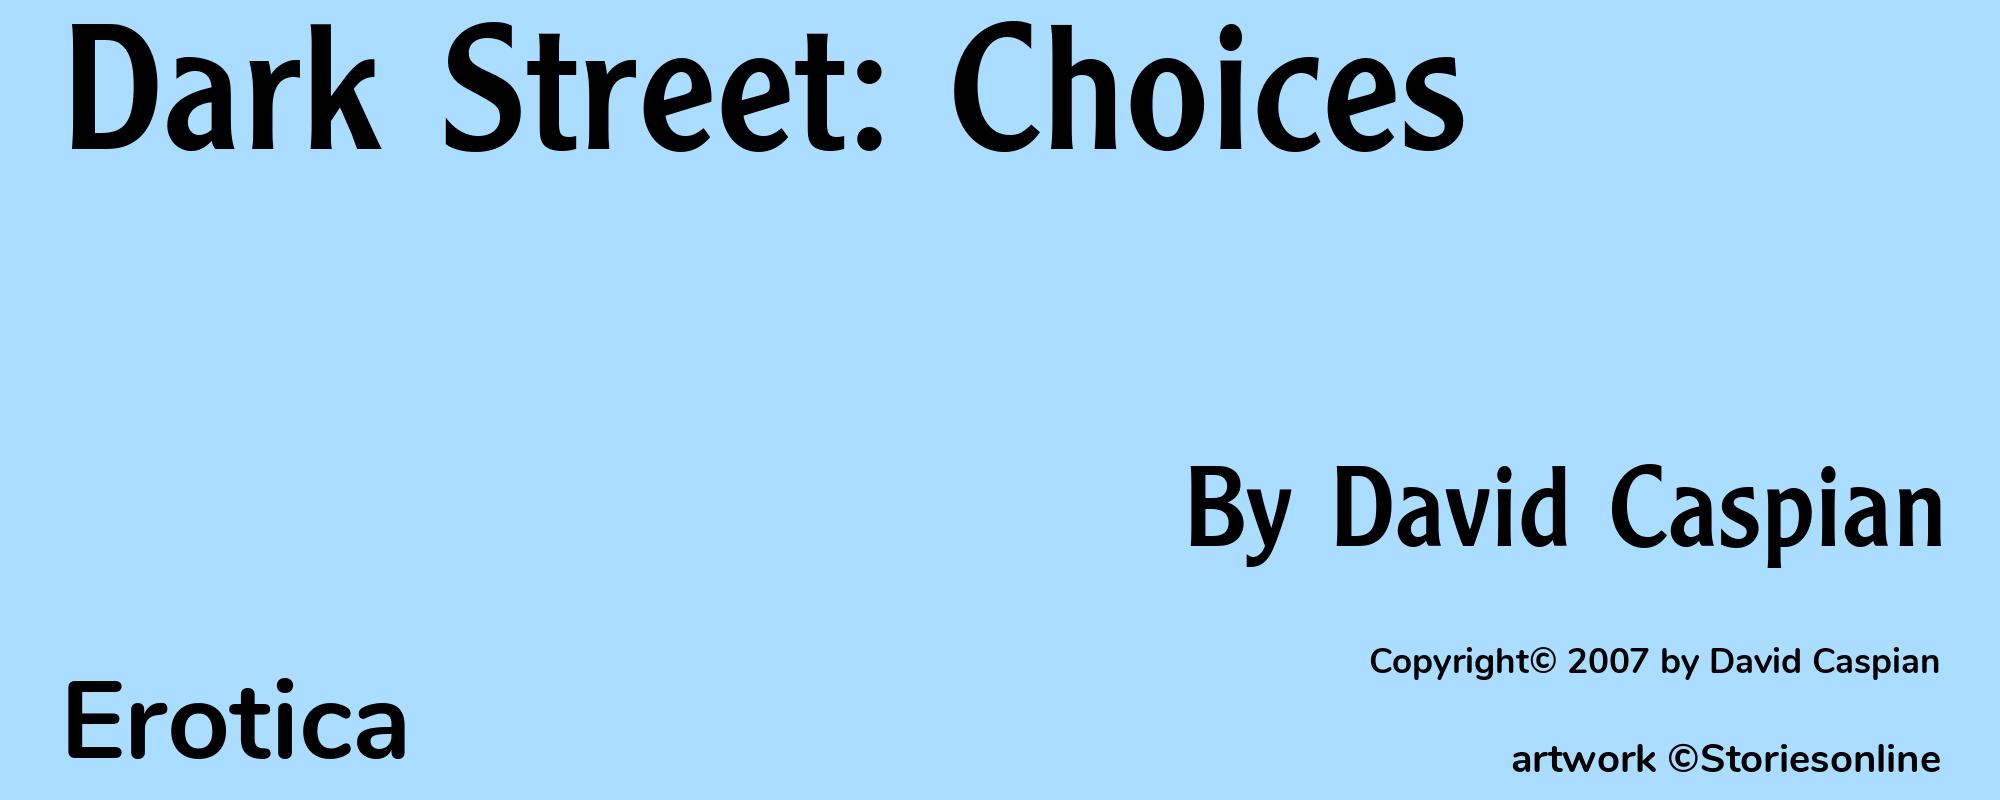 Dark Street: Choices - Cover